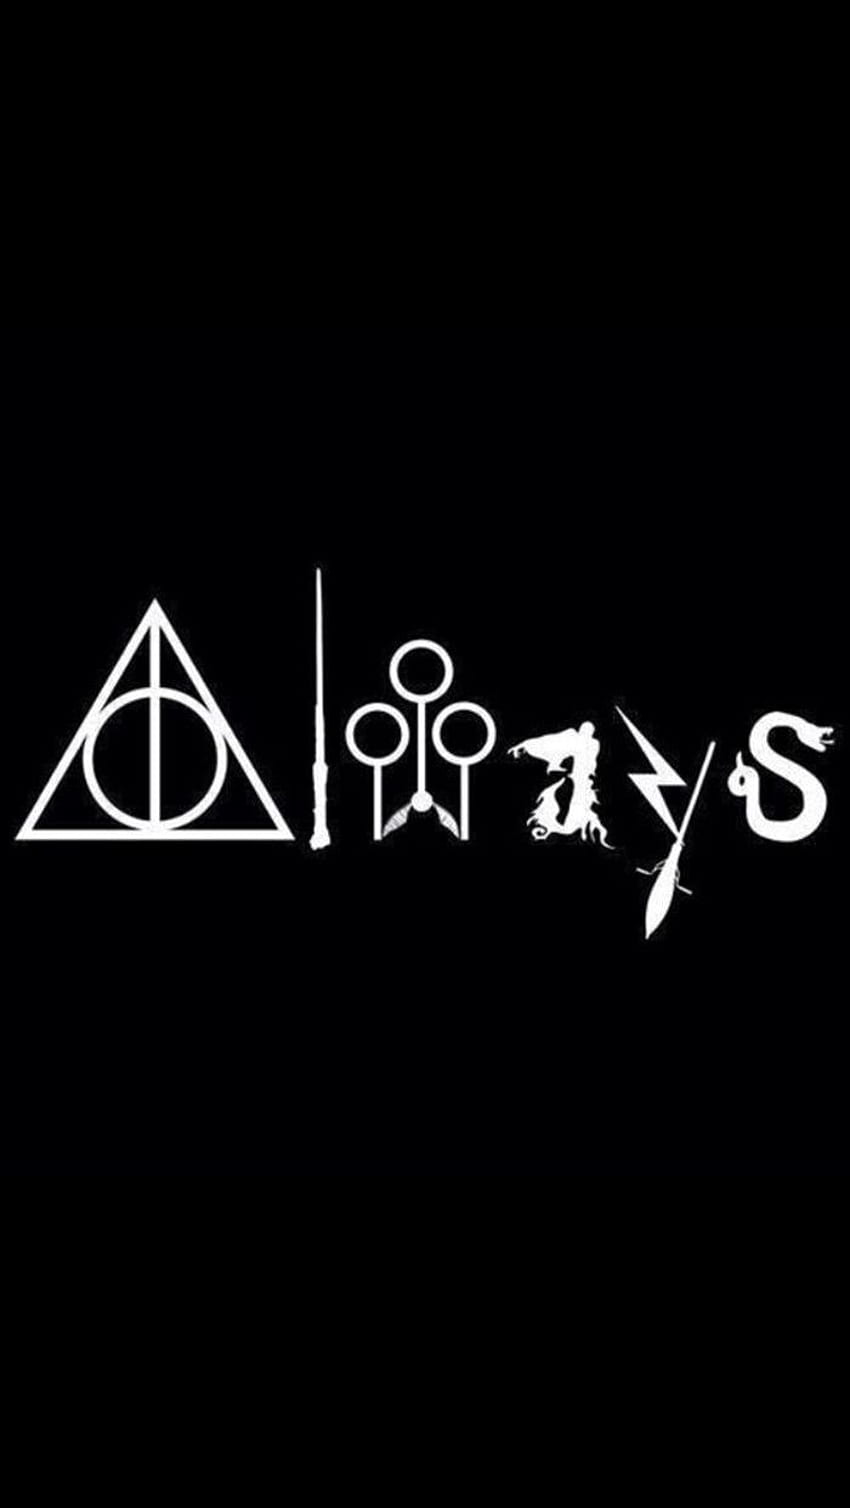 Download Aesthetic Harry Potter Severus Always Wallpaper | Wallpapers.com